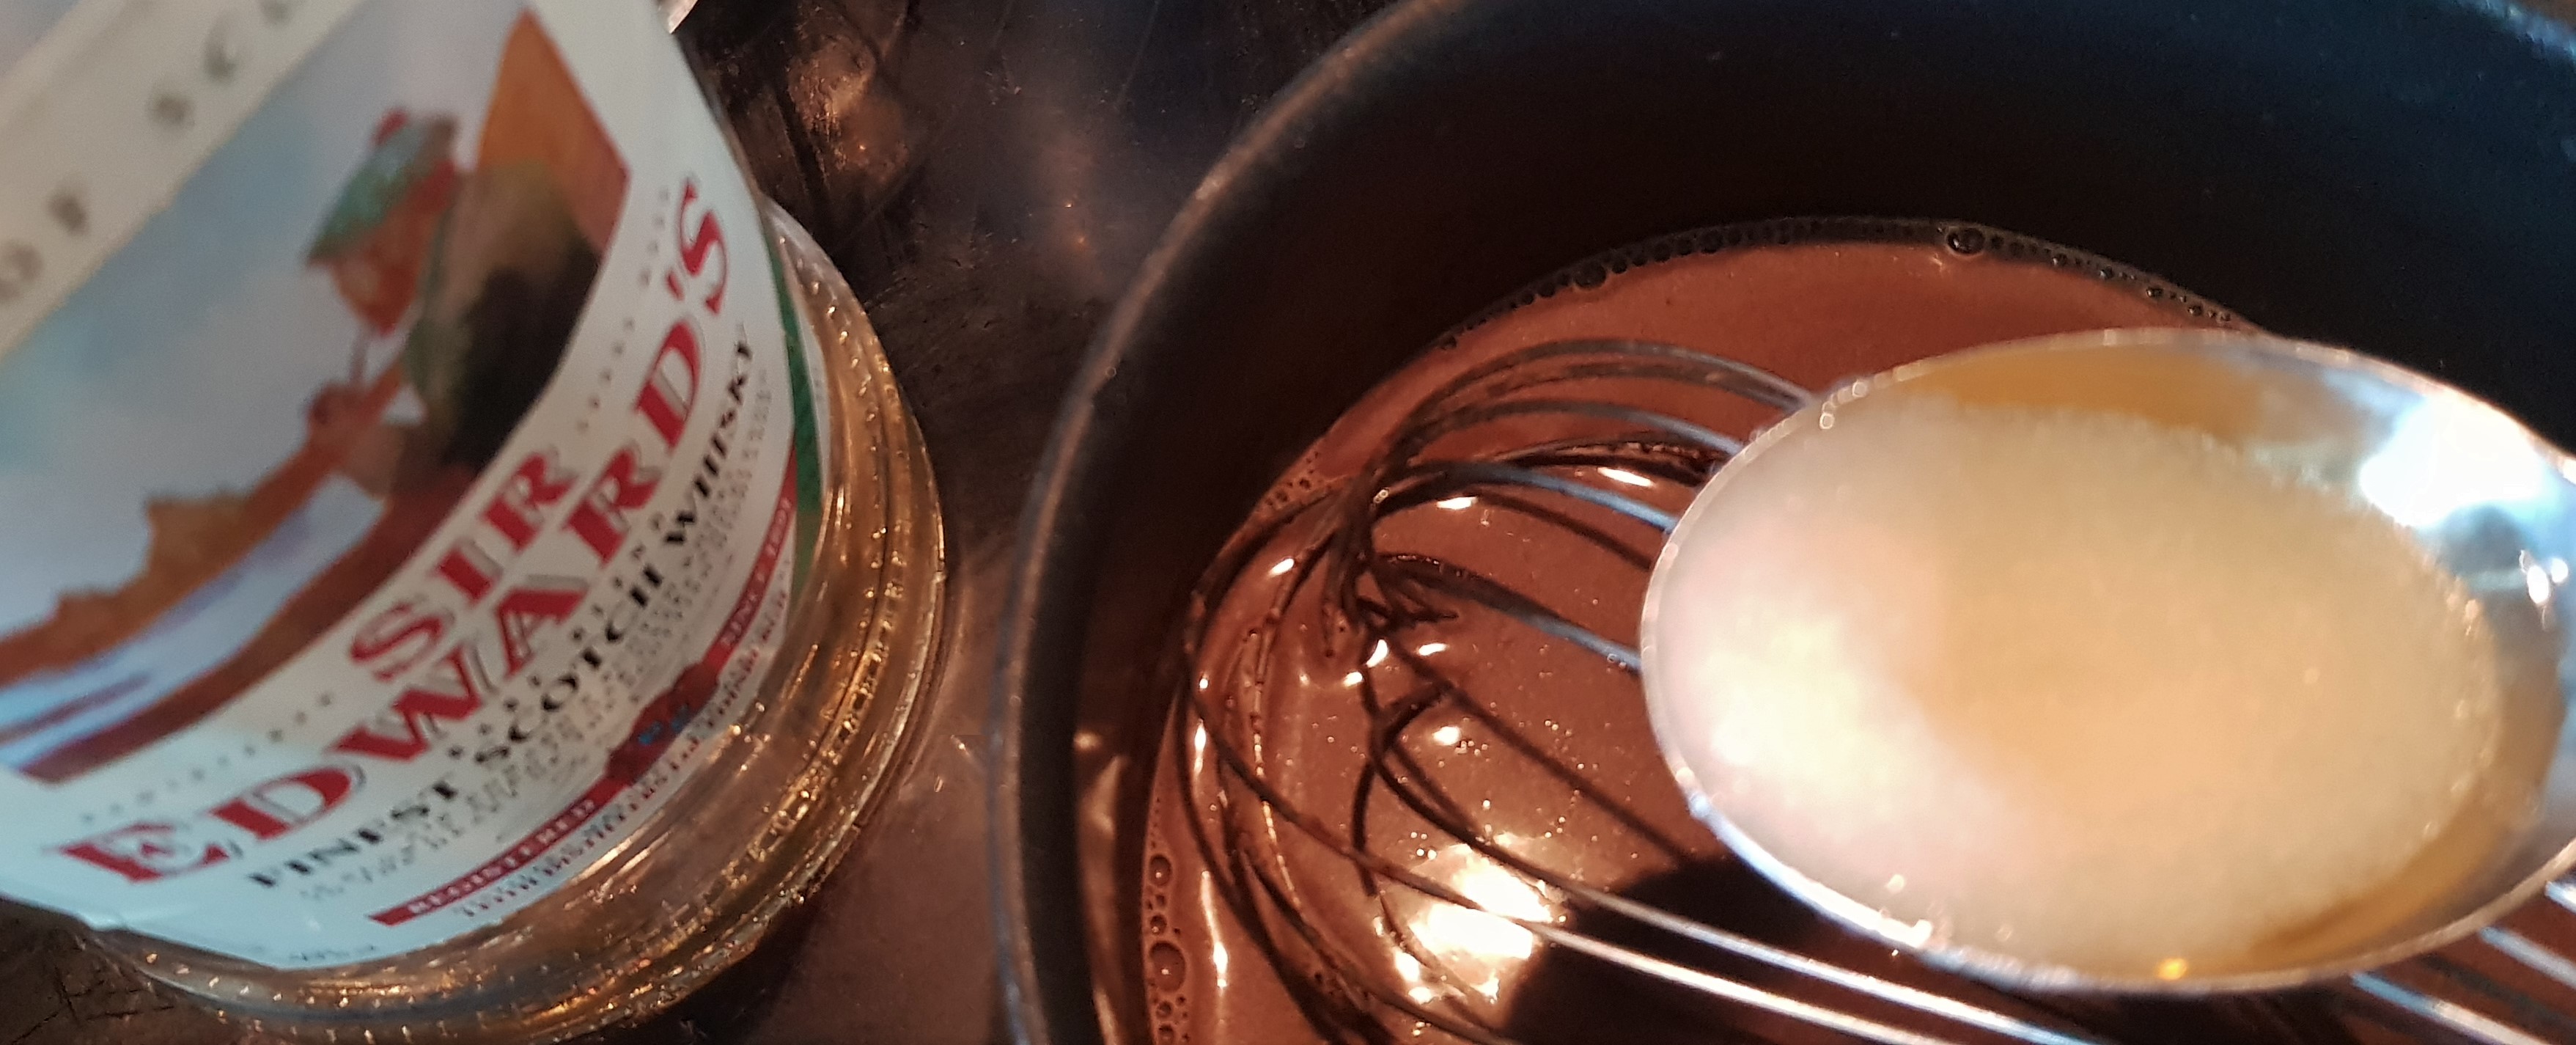 Ciocolata calda cu whisky / Irish chocolate